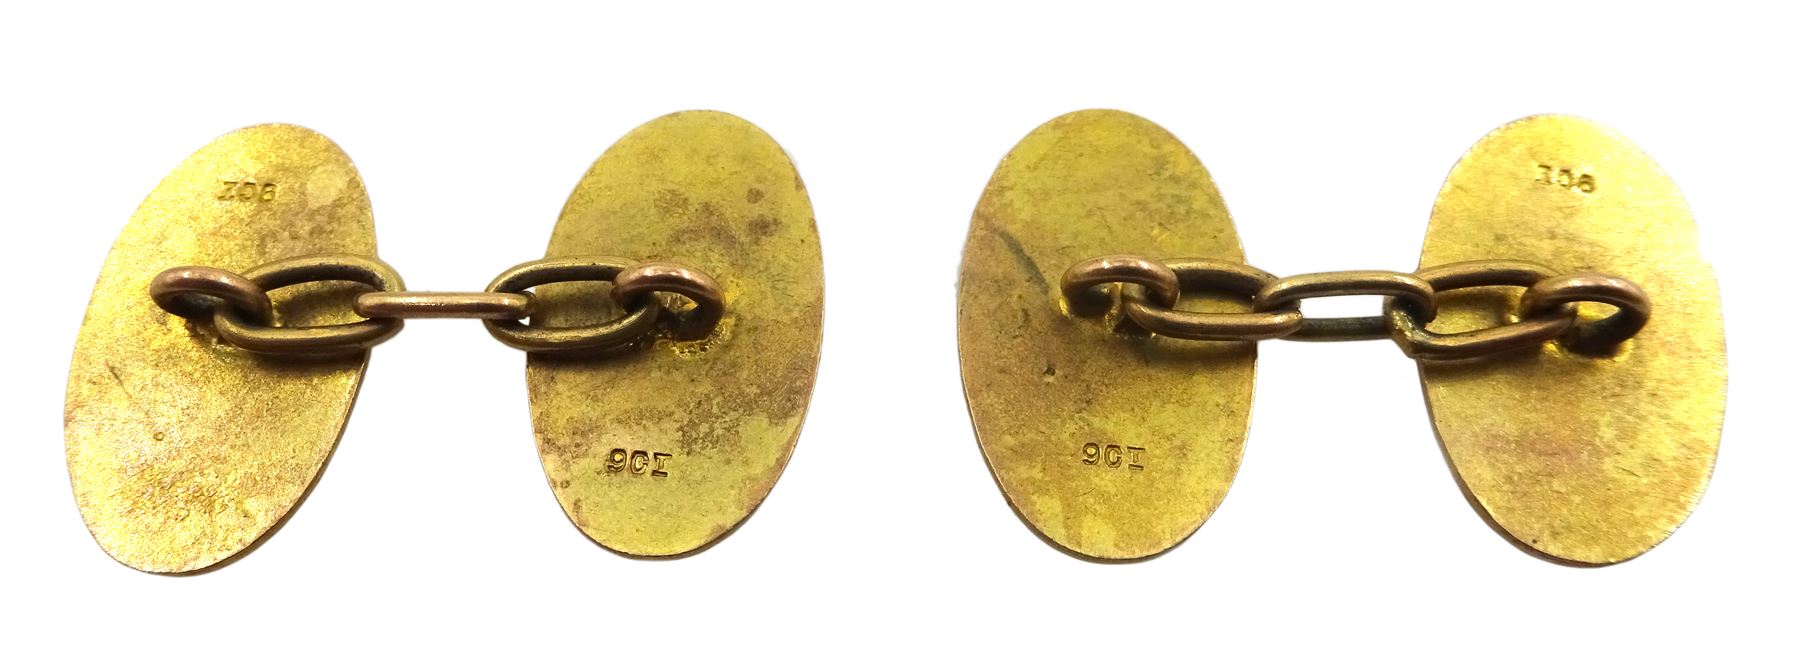 Pair of gold cufflinks - Image 2 of 2